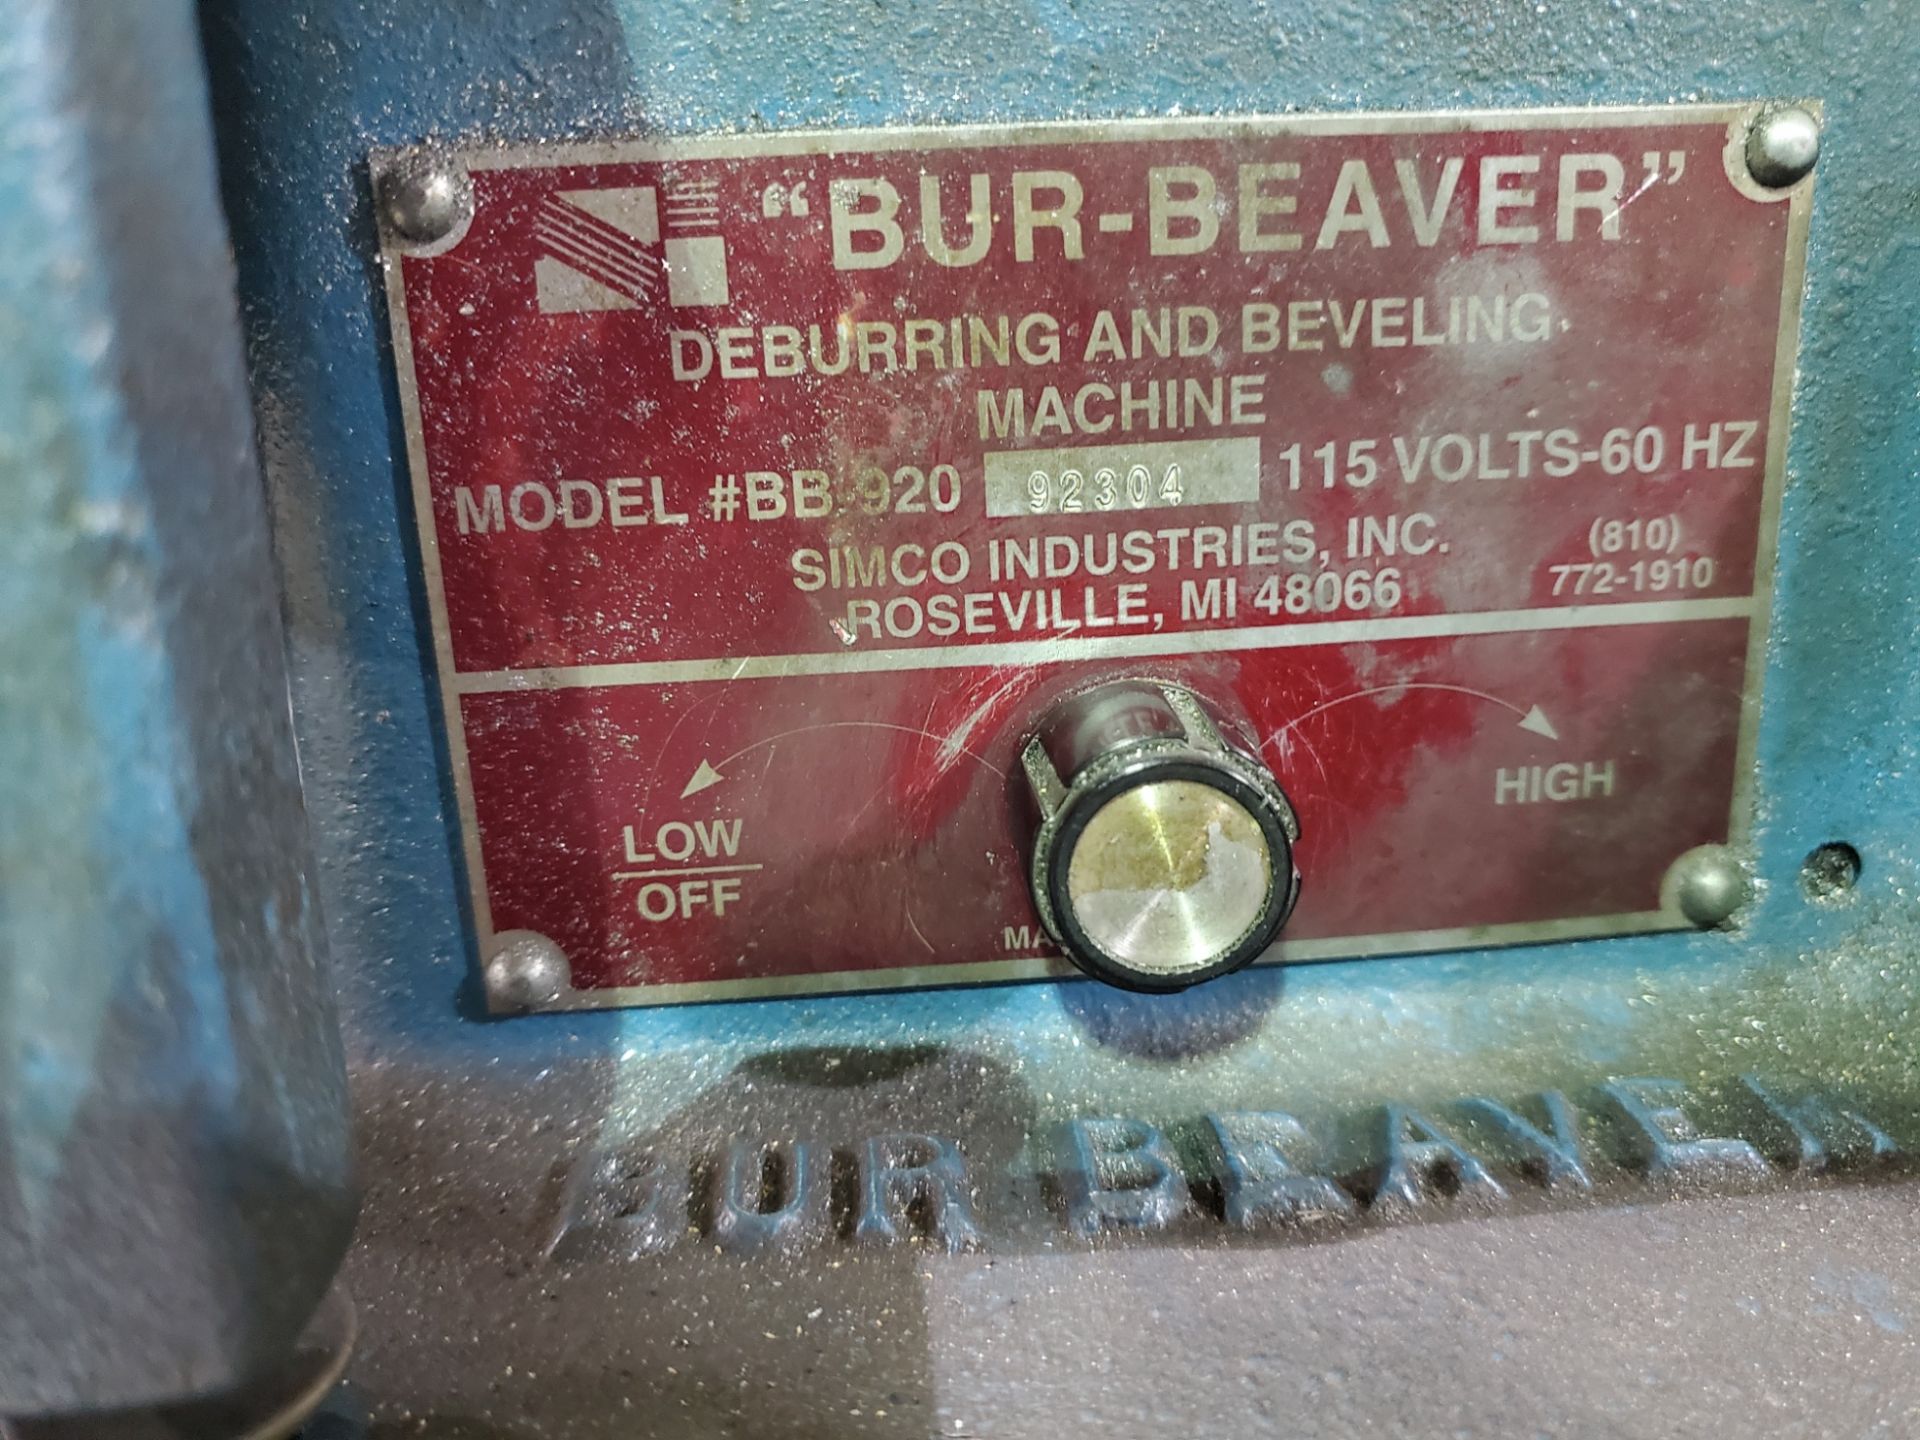 Bur-Beaver #BB920 Deburr/Beveling Machine, S/N 92304, 115 Volt - Image 2 of 2